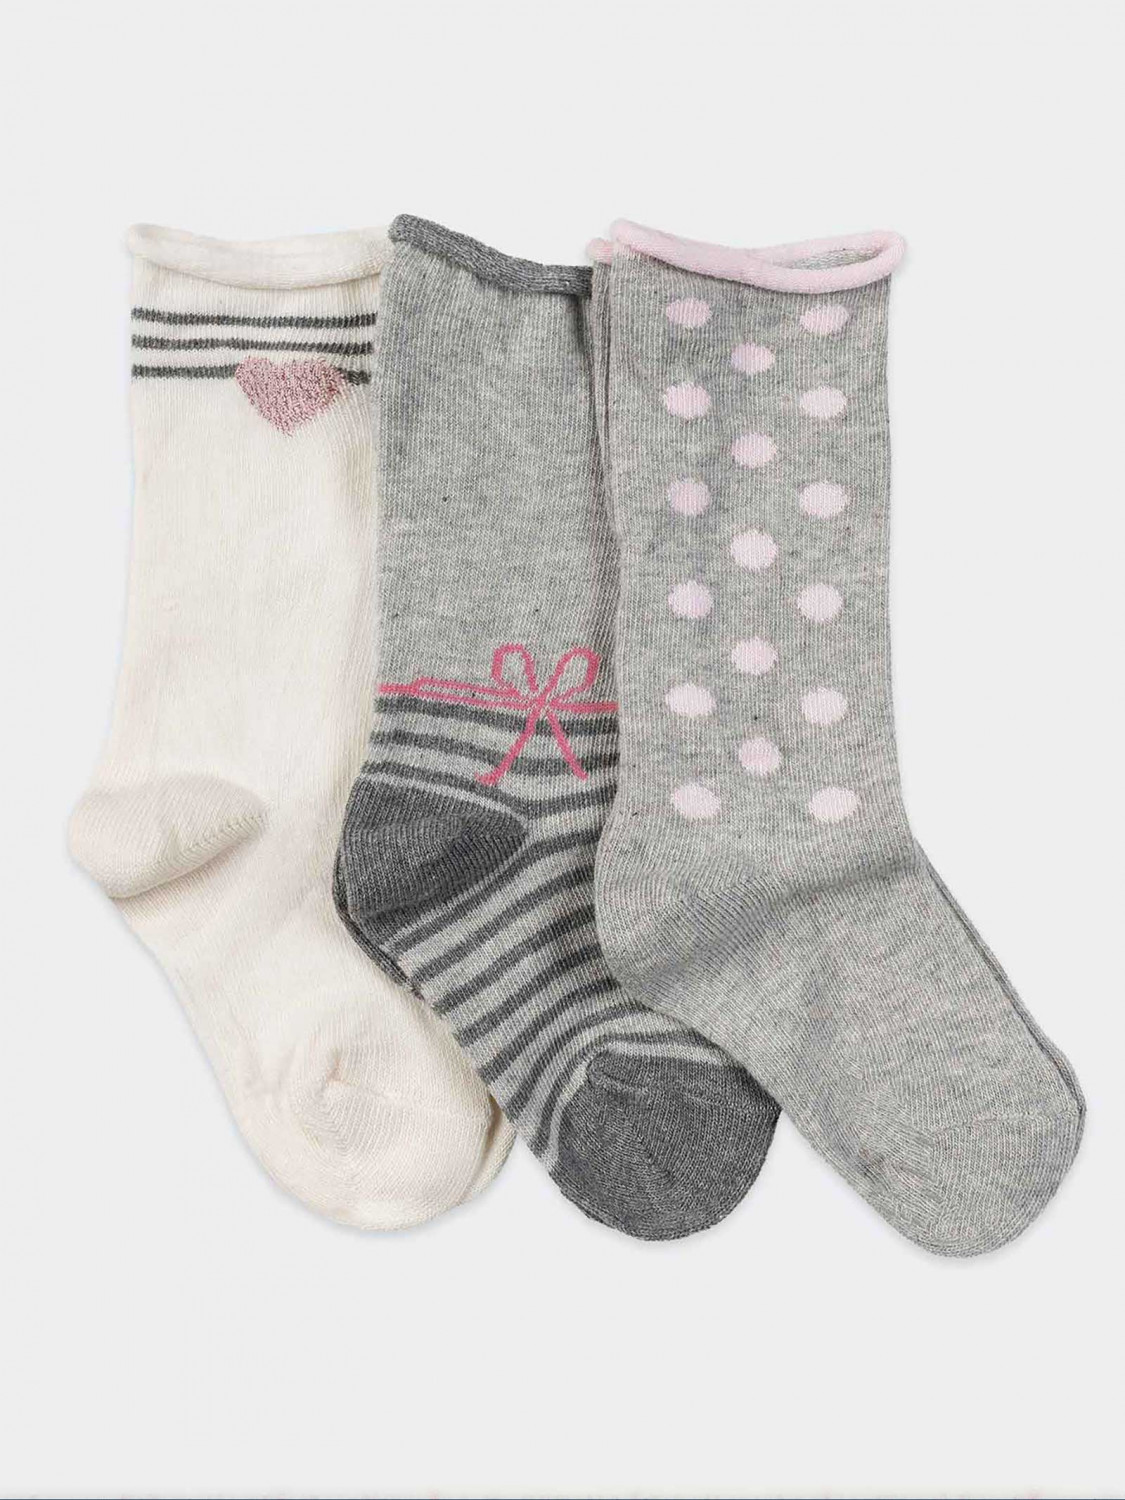 Tris big dots, heart and bow pattern Kids Knee high socks